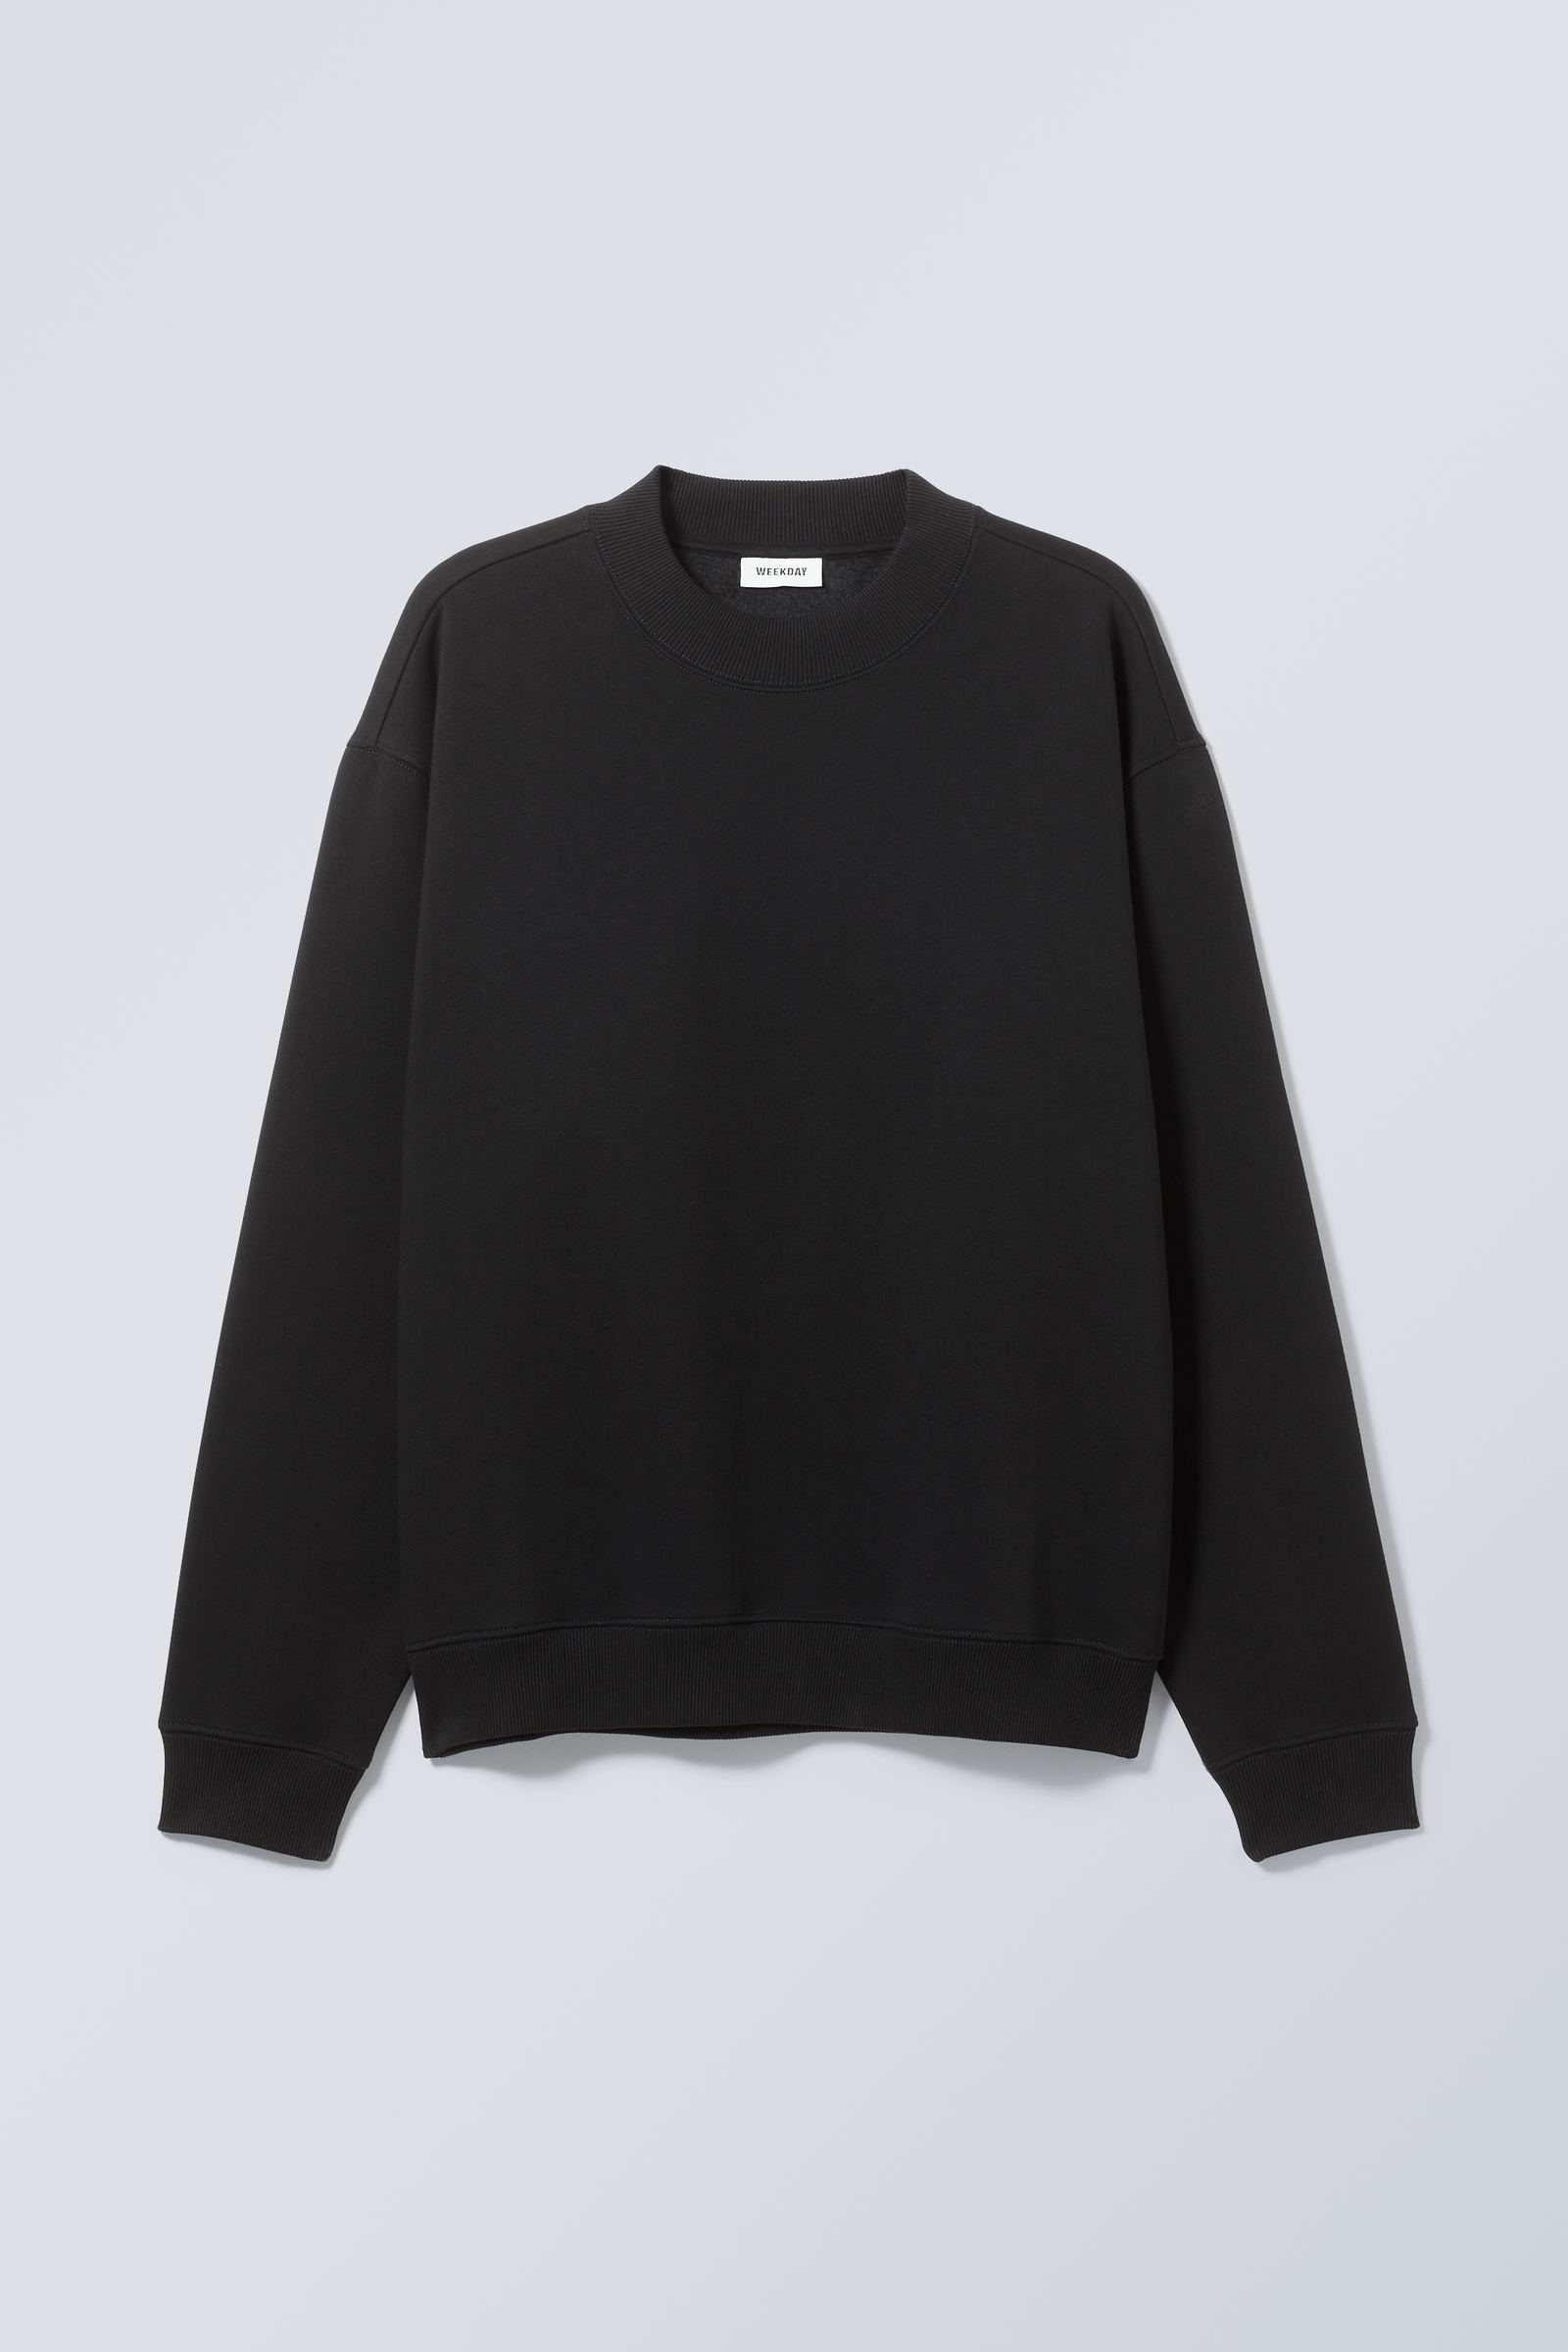 Black - Relaxed Heavyweight Sweatshirt - 2